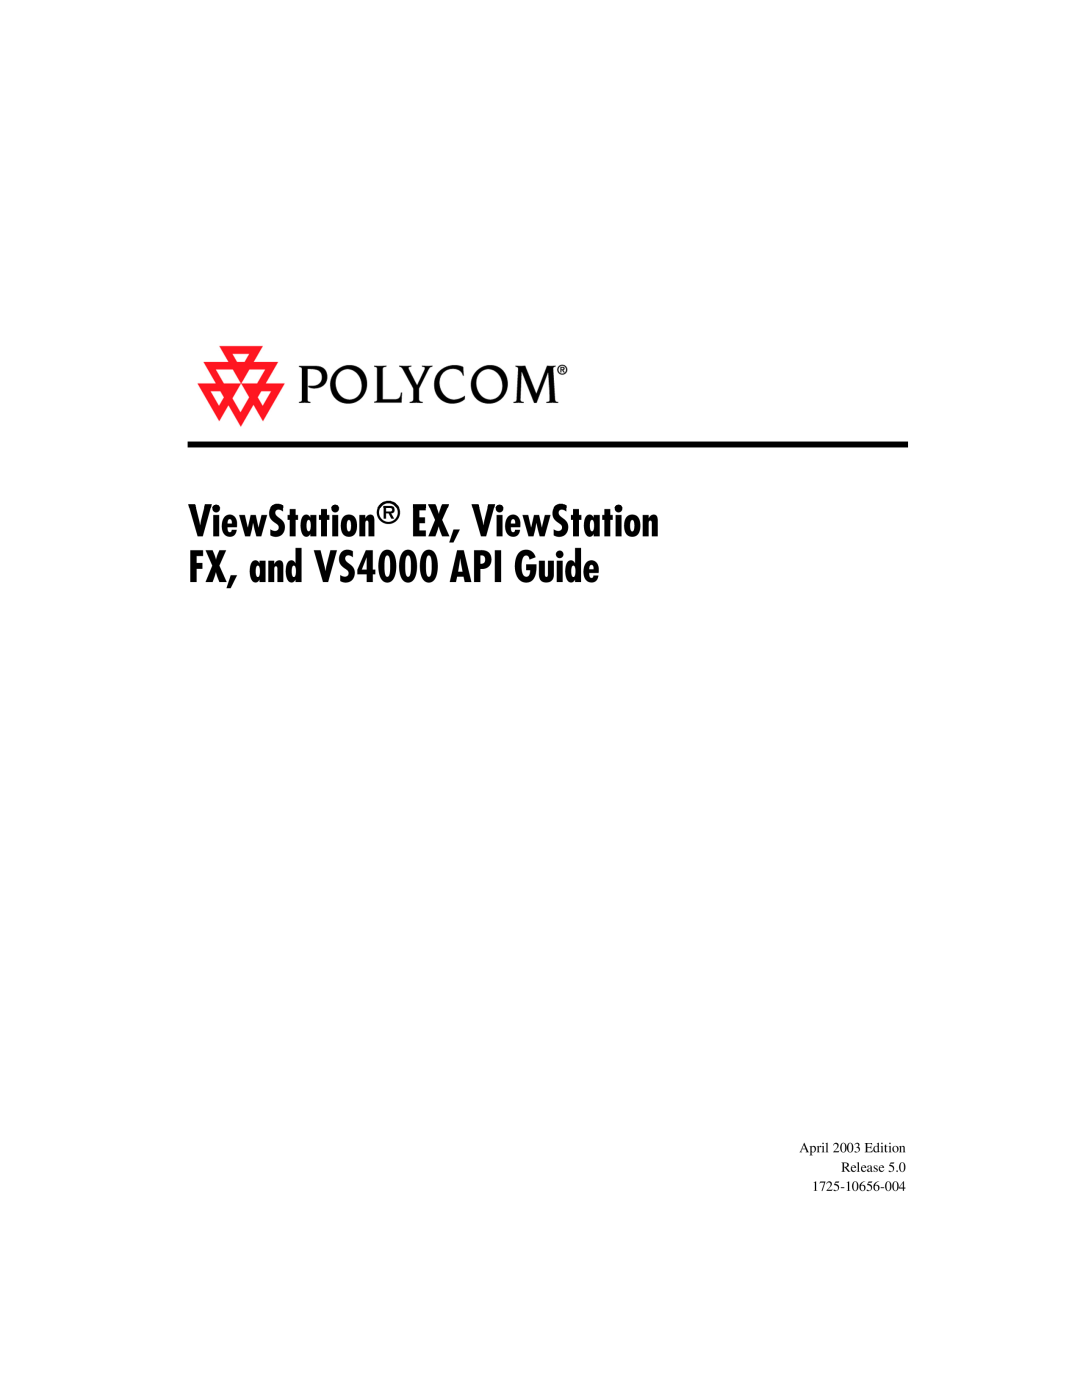 Polycom VIEWSTATION EX manual ViewStation EX, ViewStation, FX, and VS4000 API Guide, VS4000 User’s Guide 